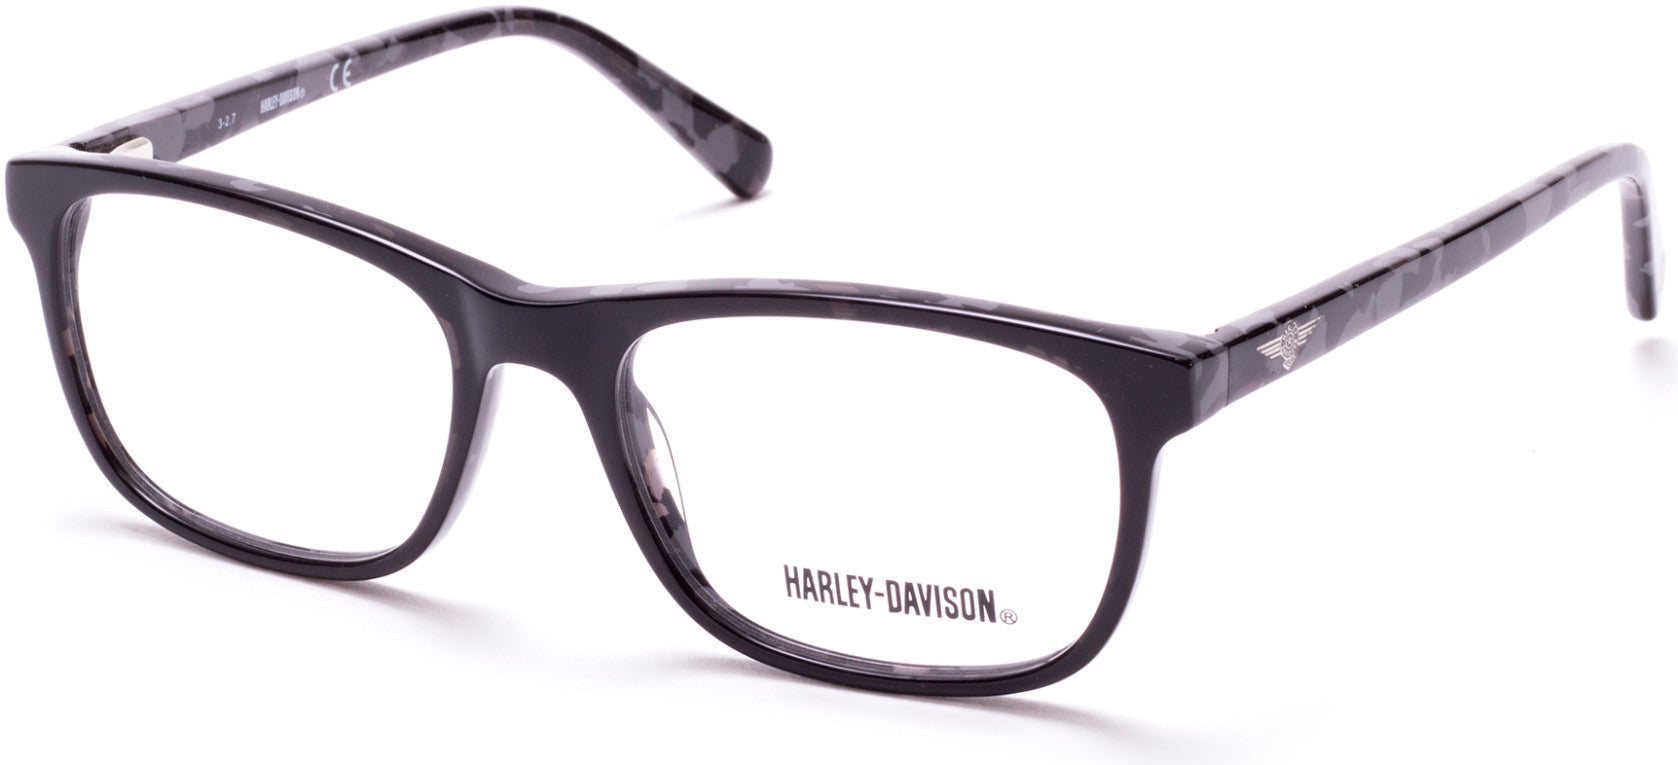 Harley-Davidson HD0135T Geometric Eyeglasses 001-001 - Shiny Black